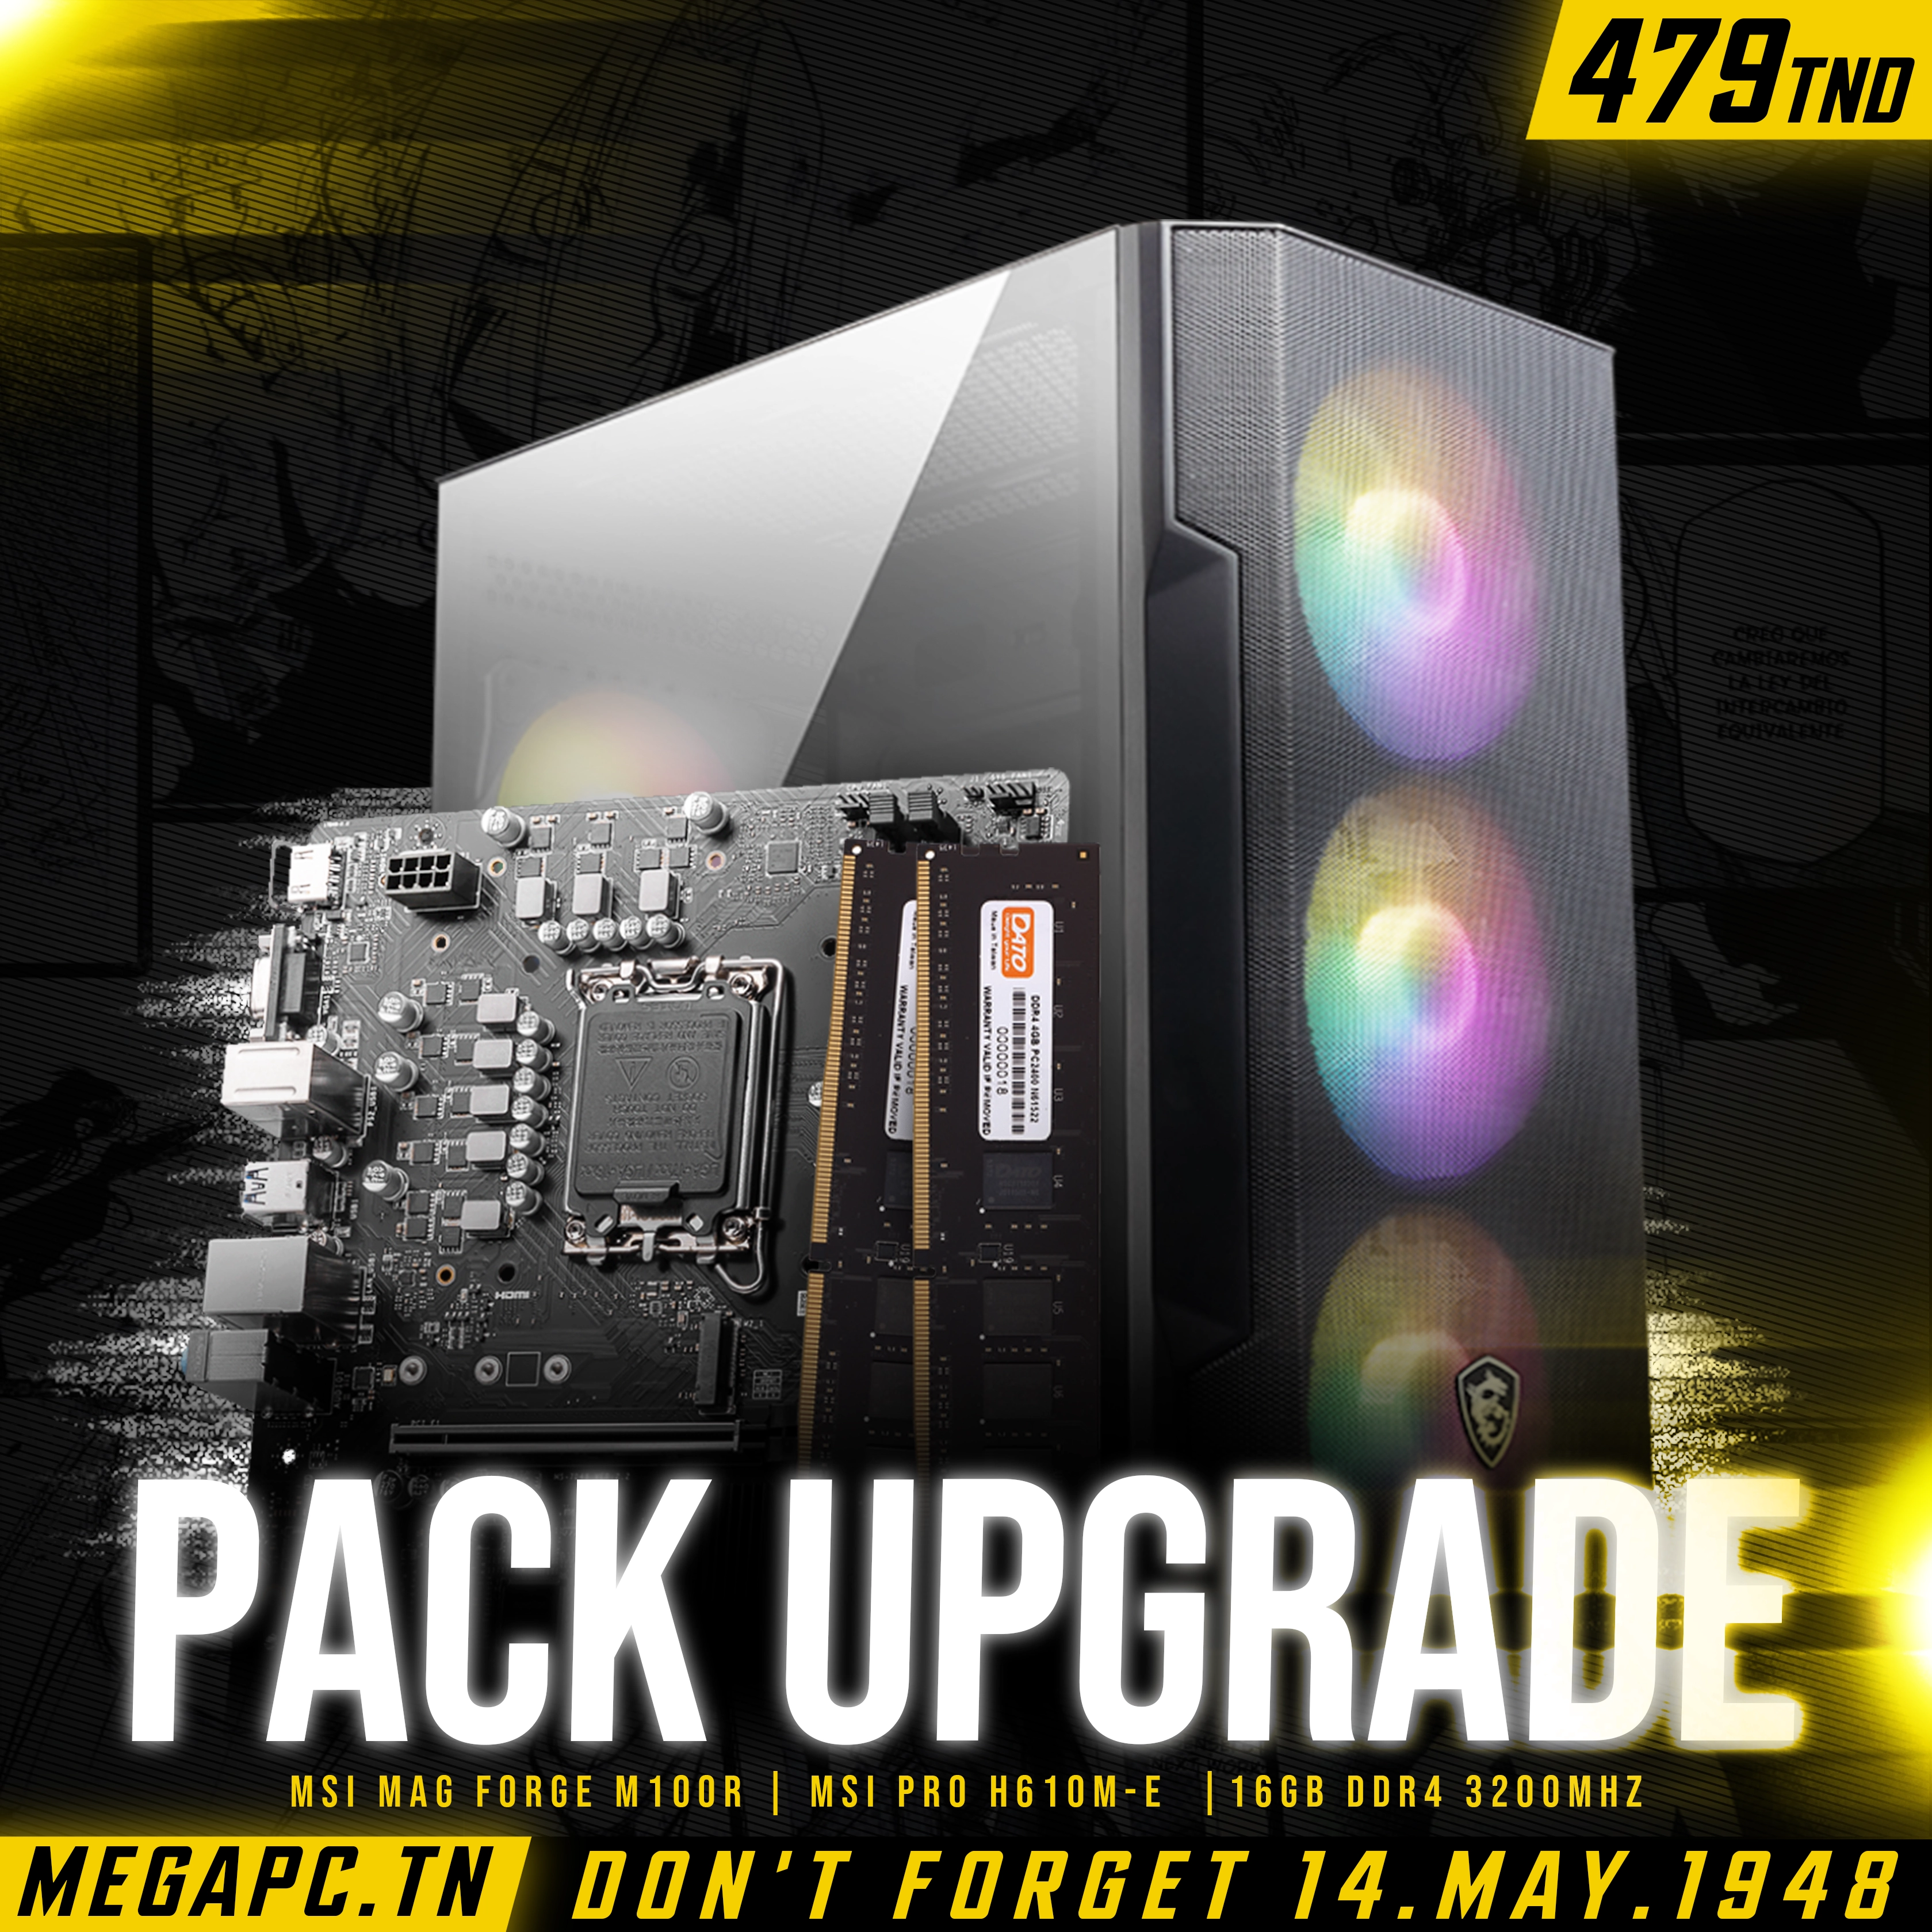 Pack Upgrade Glory R4